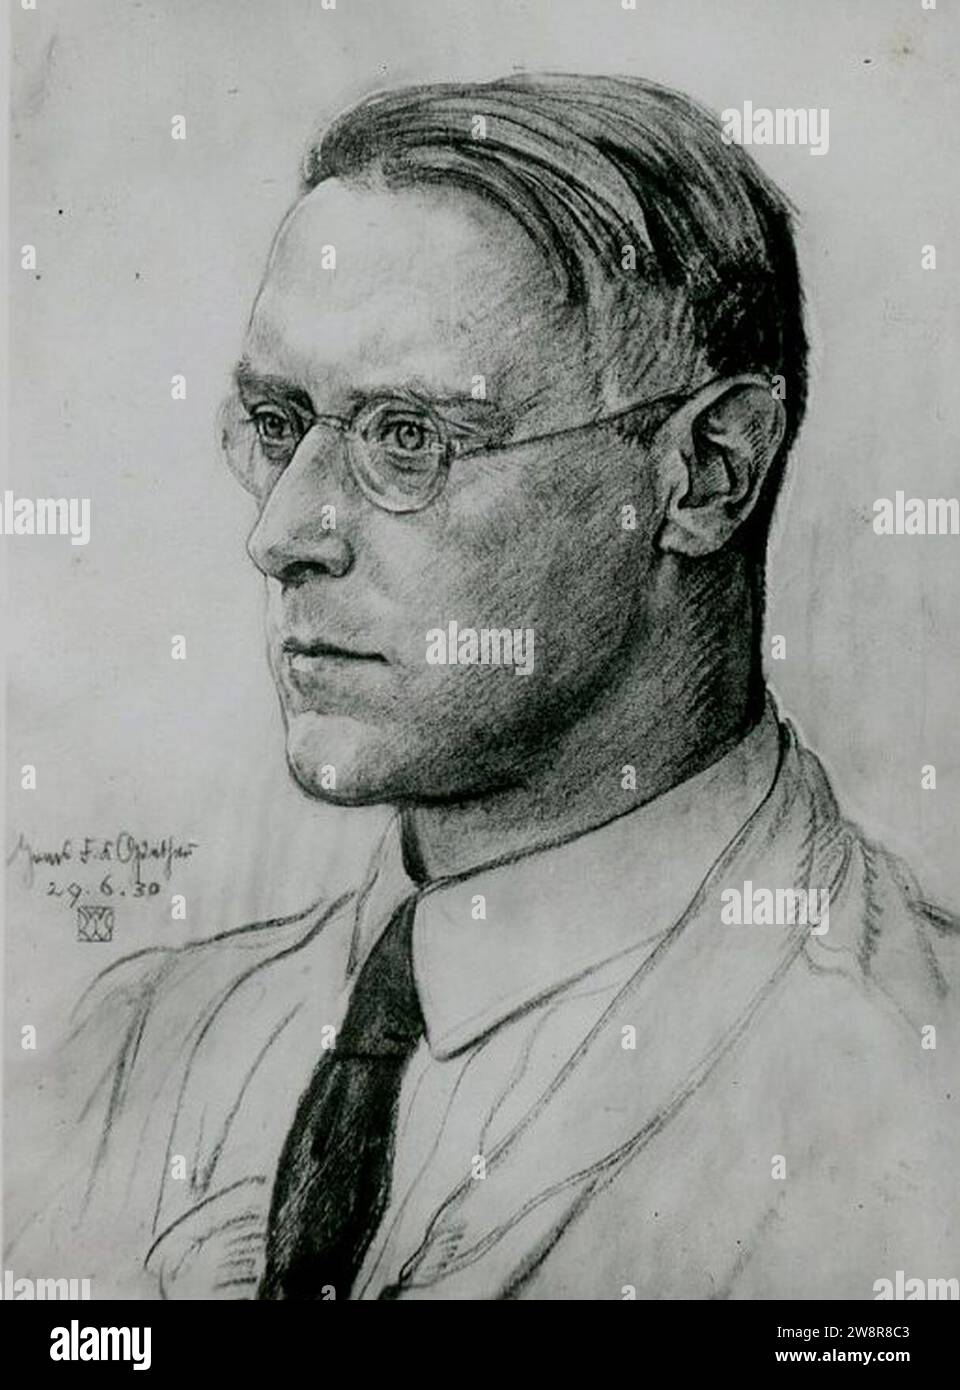 Wolfgang Willrich - Porträt Hans F. K. Günther, 1930. Stock Photo